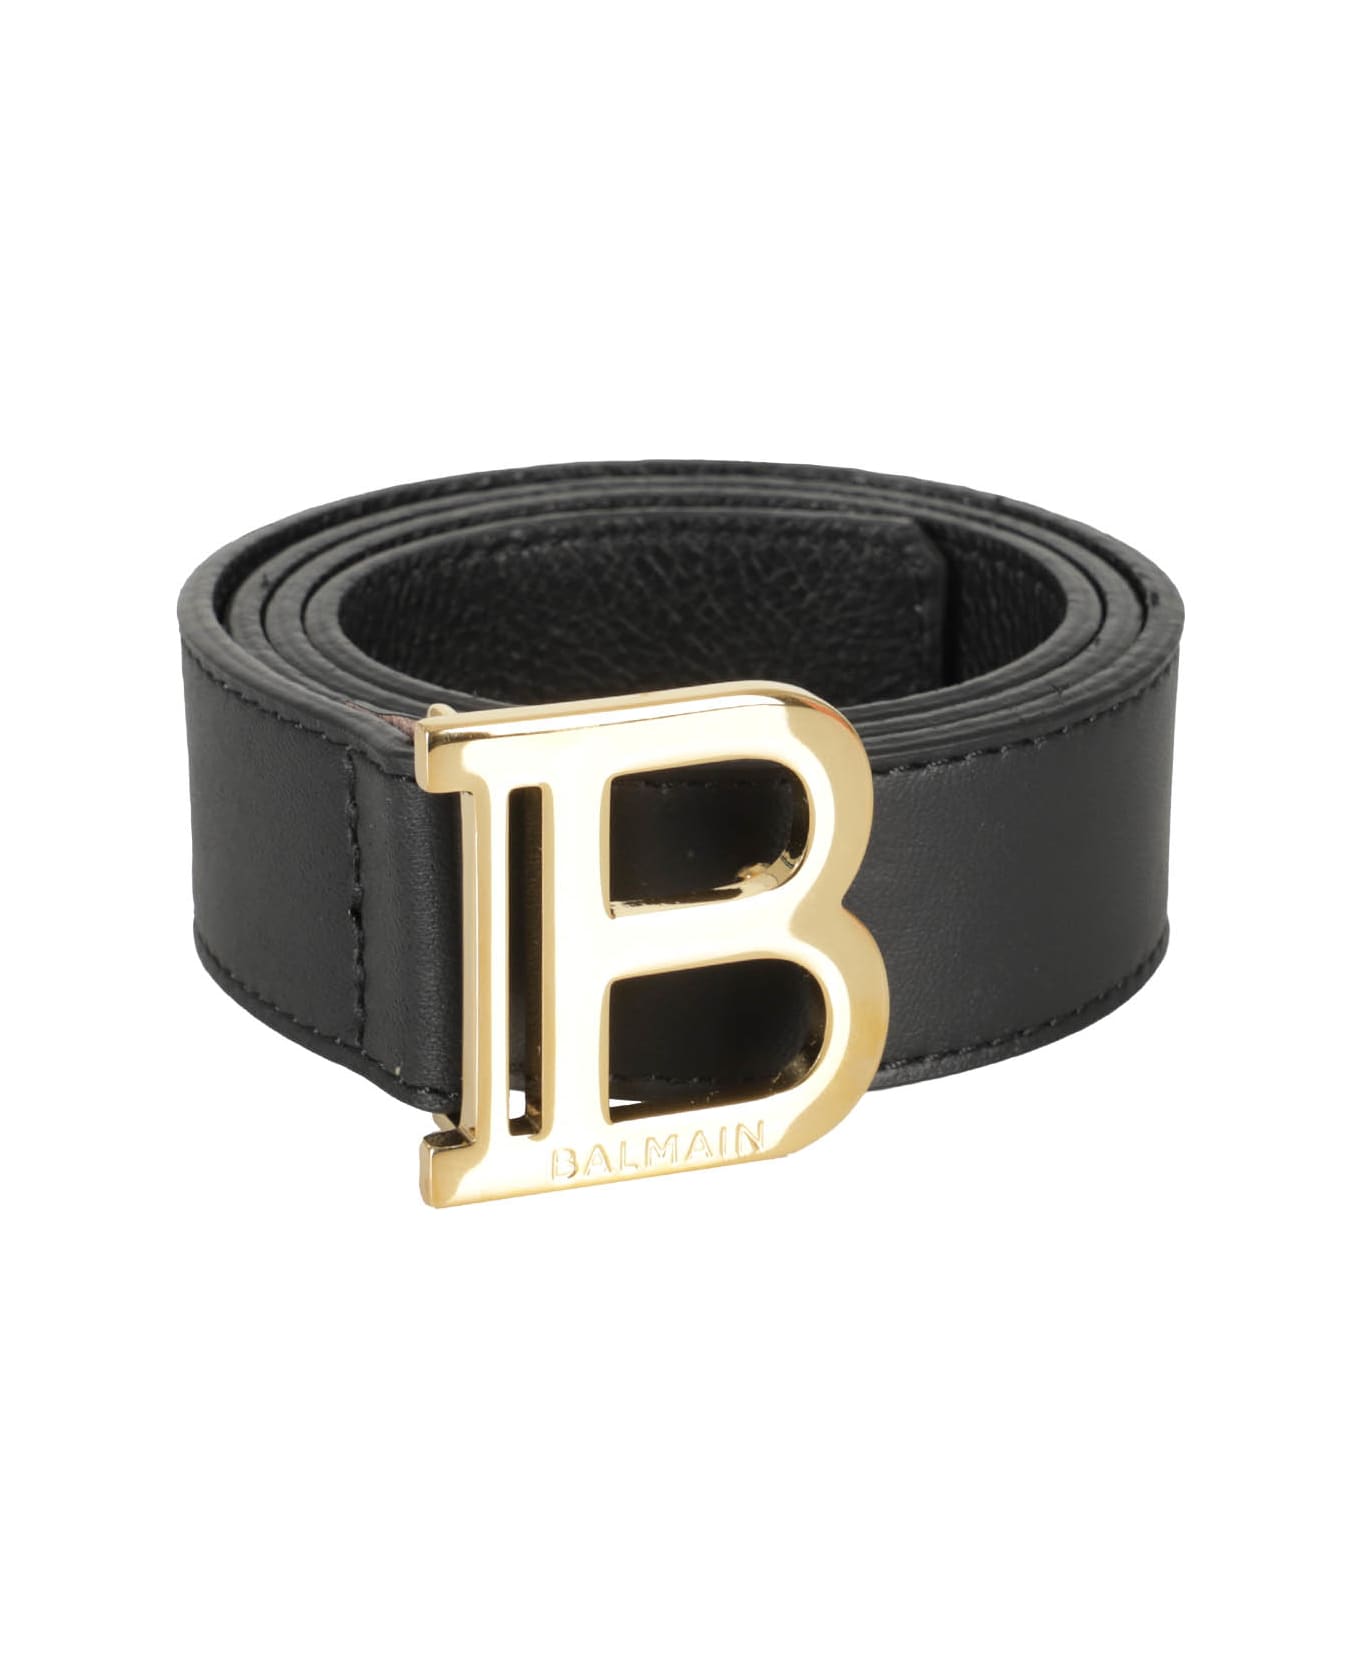 Balmain Belts - Or Black Gold アクセサリー＆ギフト